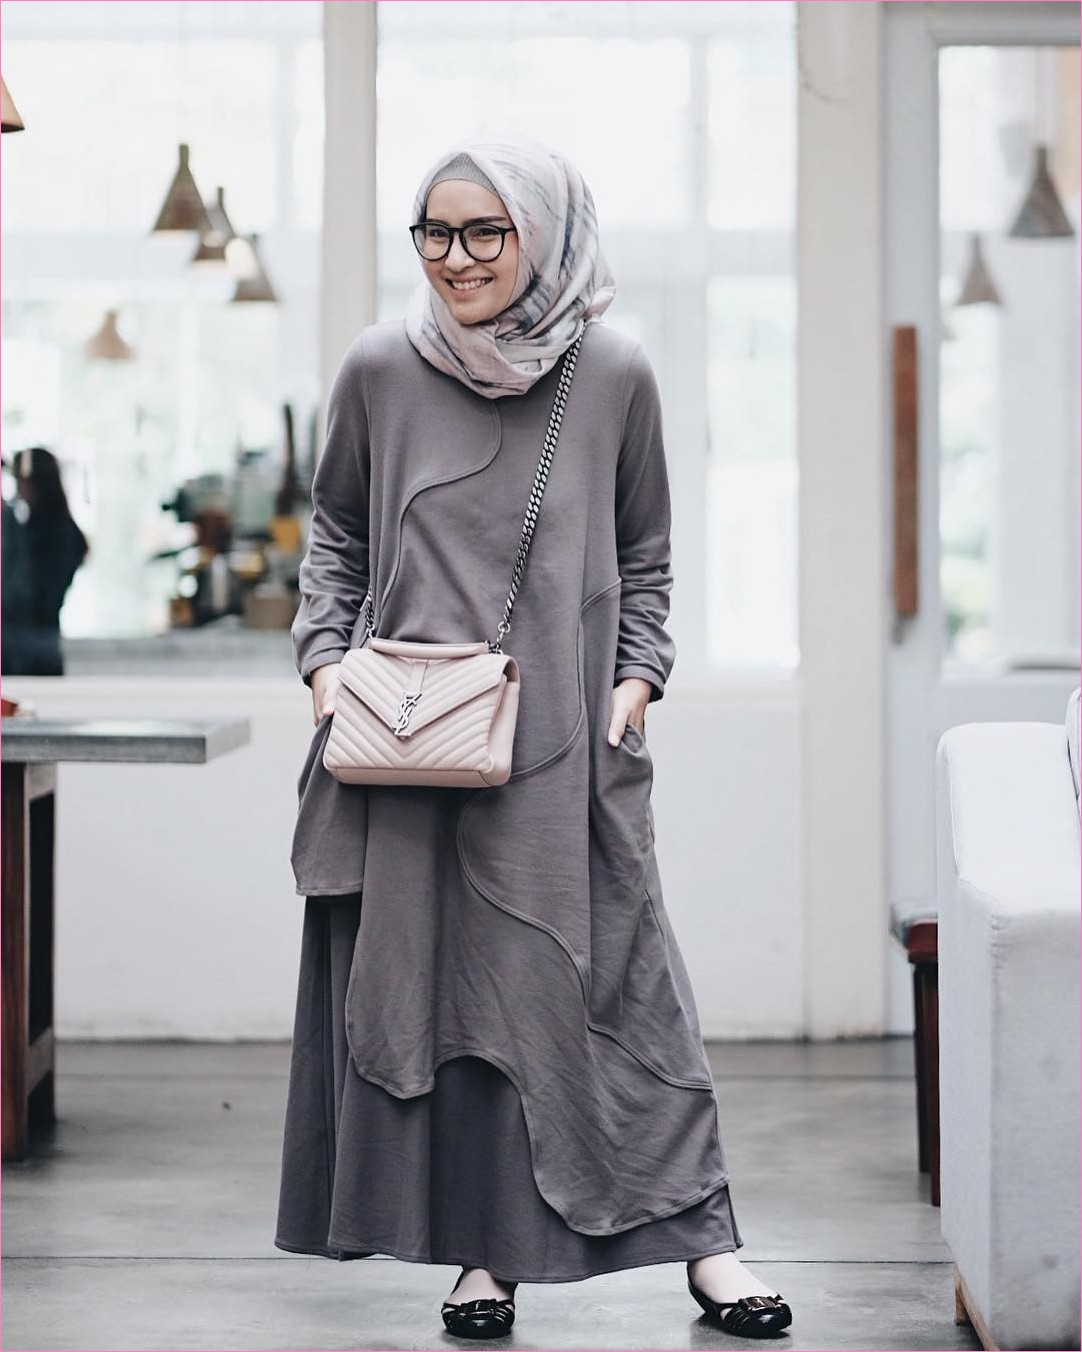  Hijabers Ala Selebgram ini menjadi salah satu busana gaul dan modis yang semakin banyak d 24 Model Outfit Baju Tunic Hijabers Ala Selebgram 2018 Terpopuler